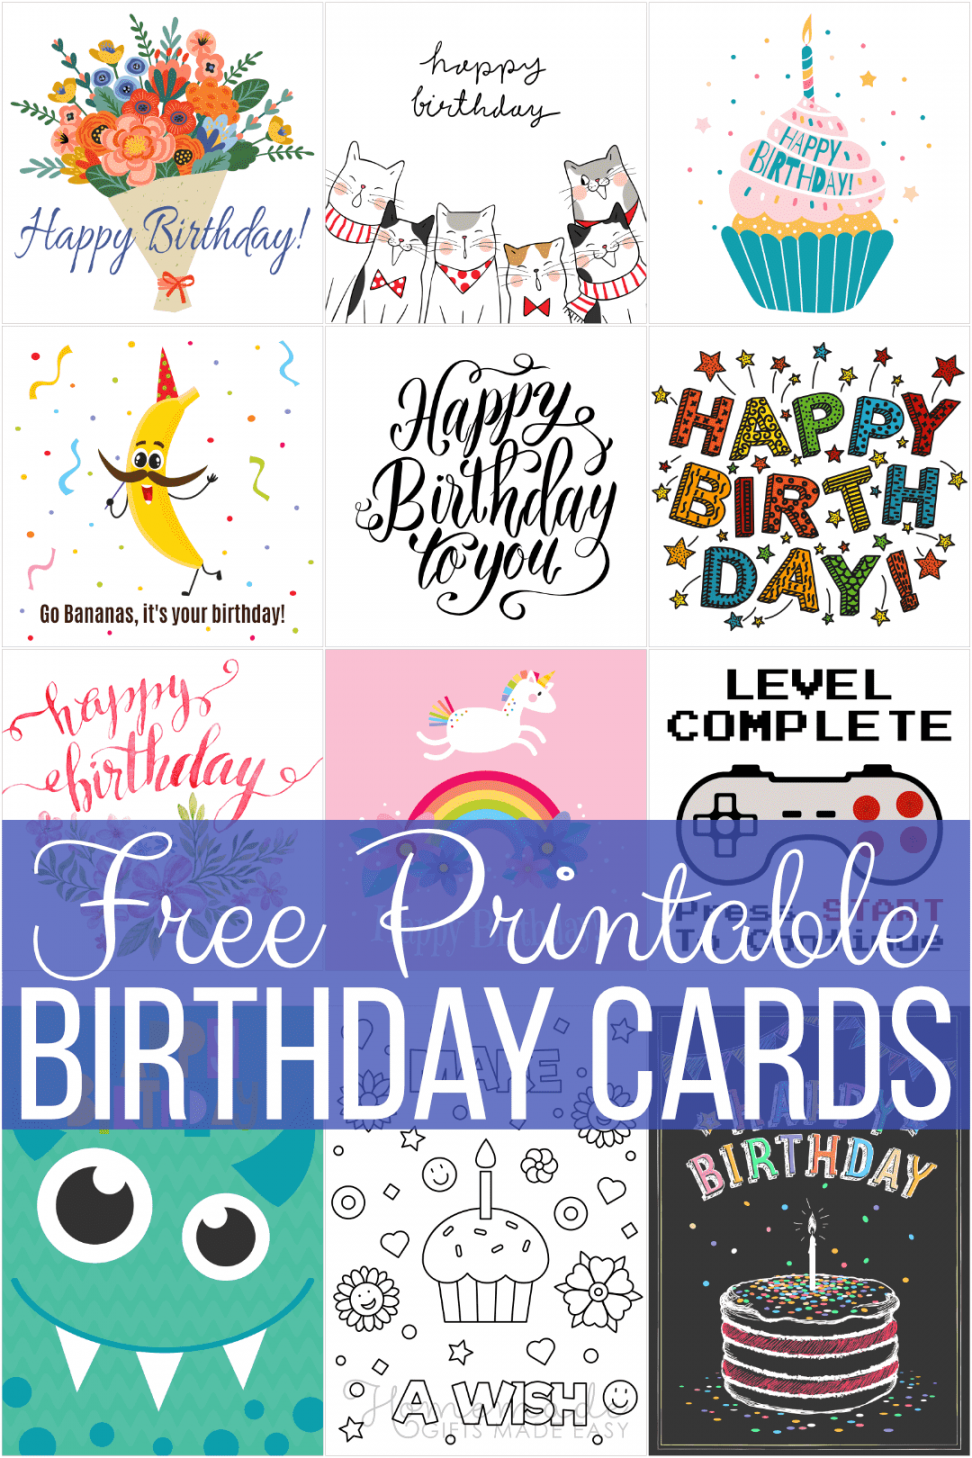 Free Printable Happy Birthday Cards - Printable - Free Printable Birthday Cards for Everyone